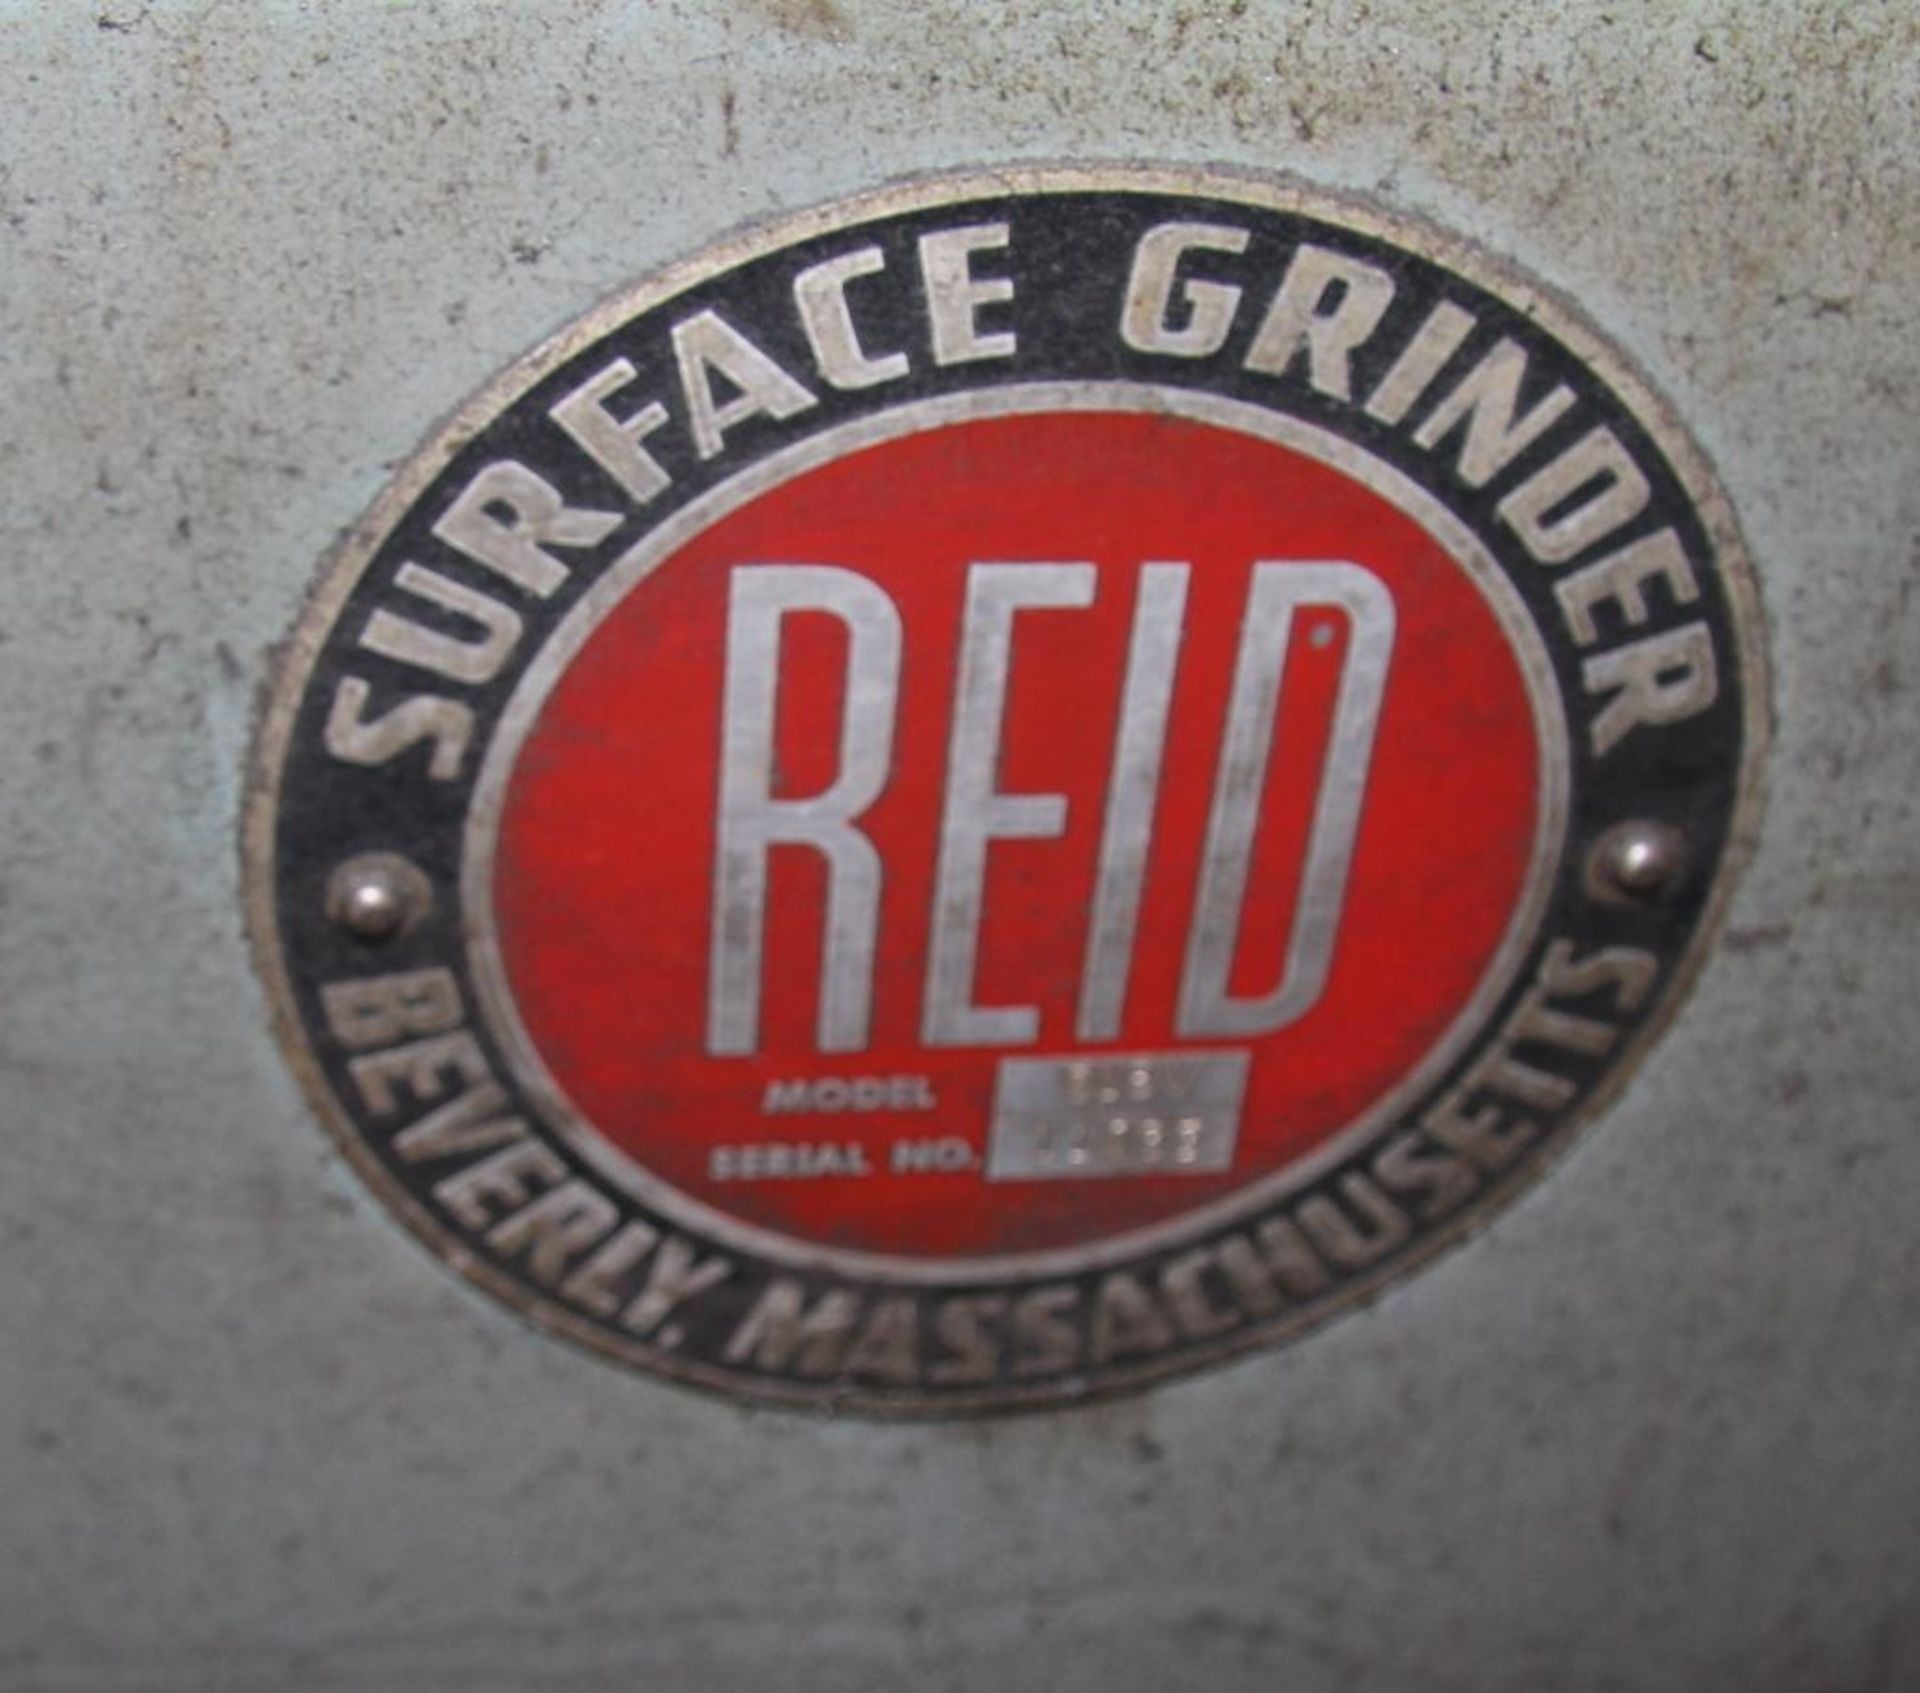 6" X 18" Reid Mdl. 618v Mechanical Feed Surface Grinder, Direct Drive Spindle - Image 3 of 4